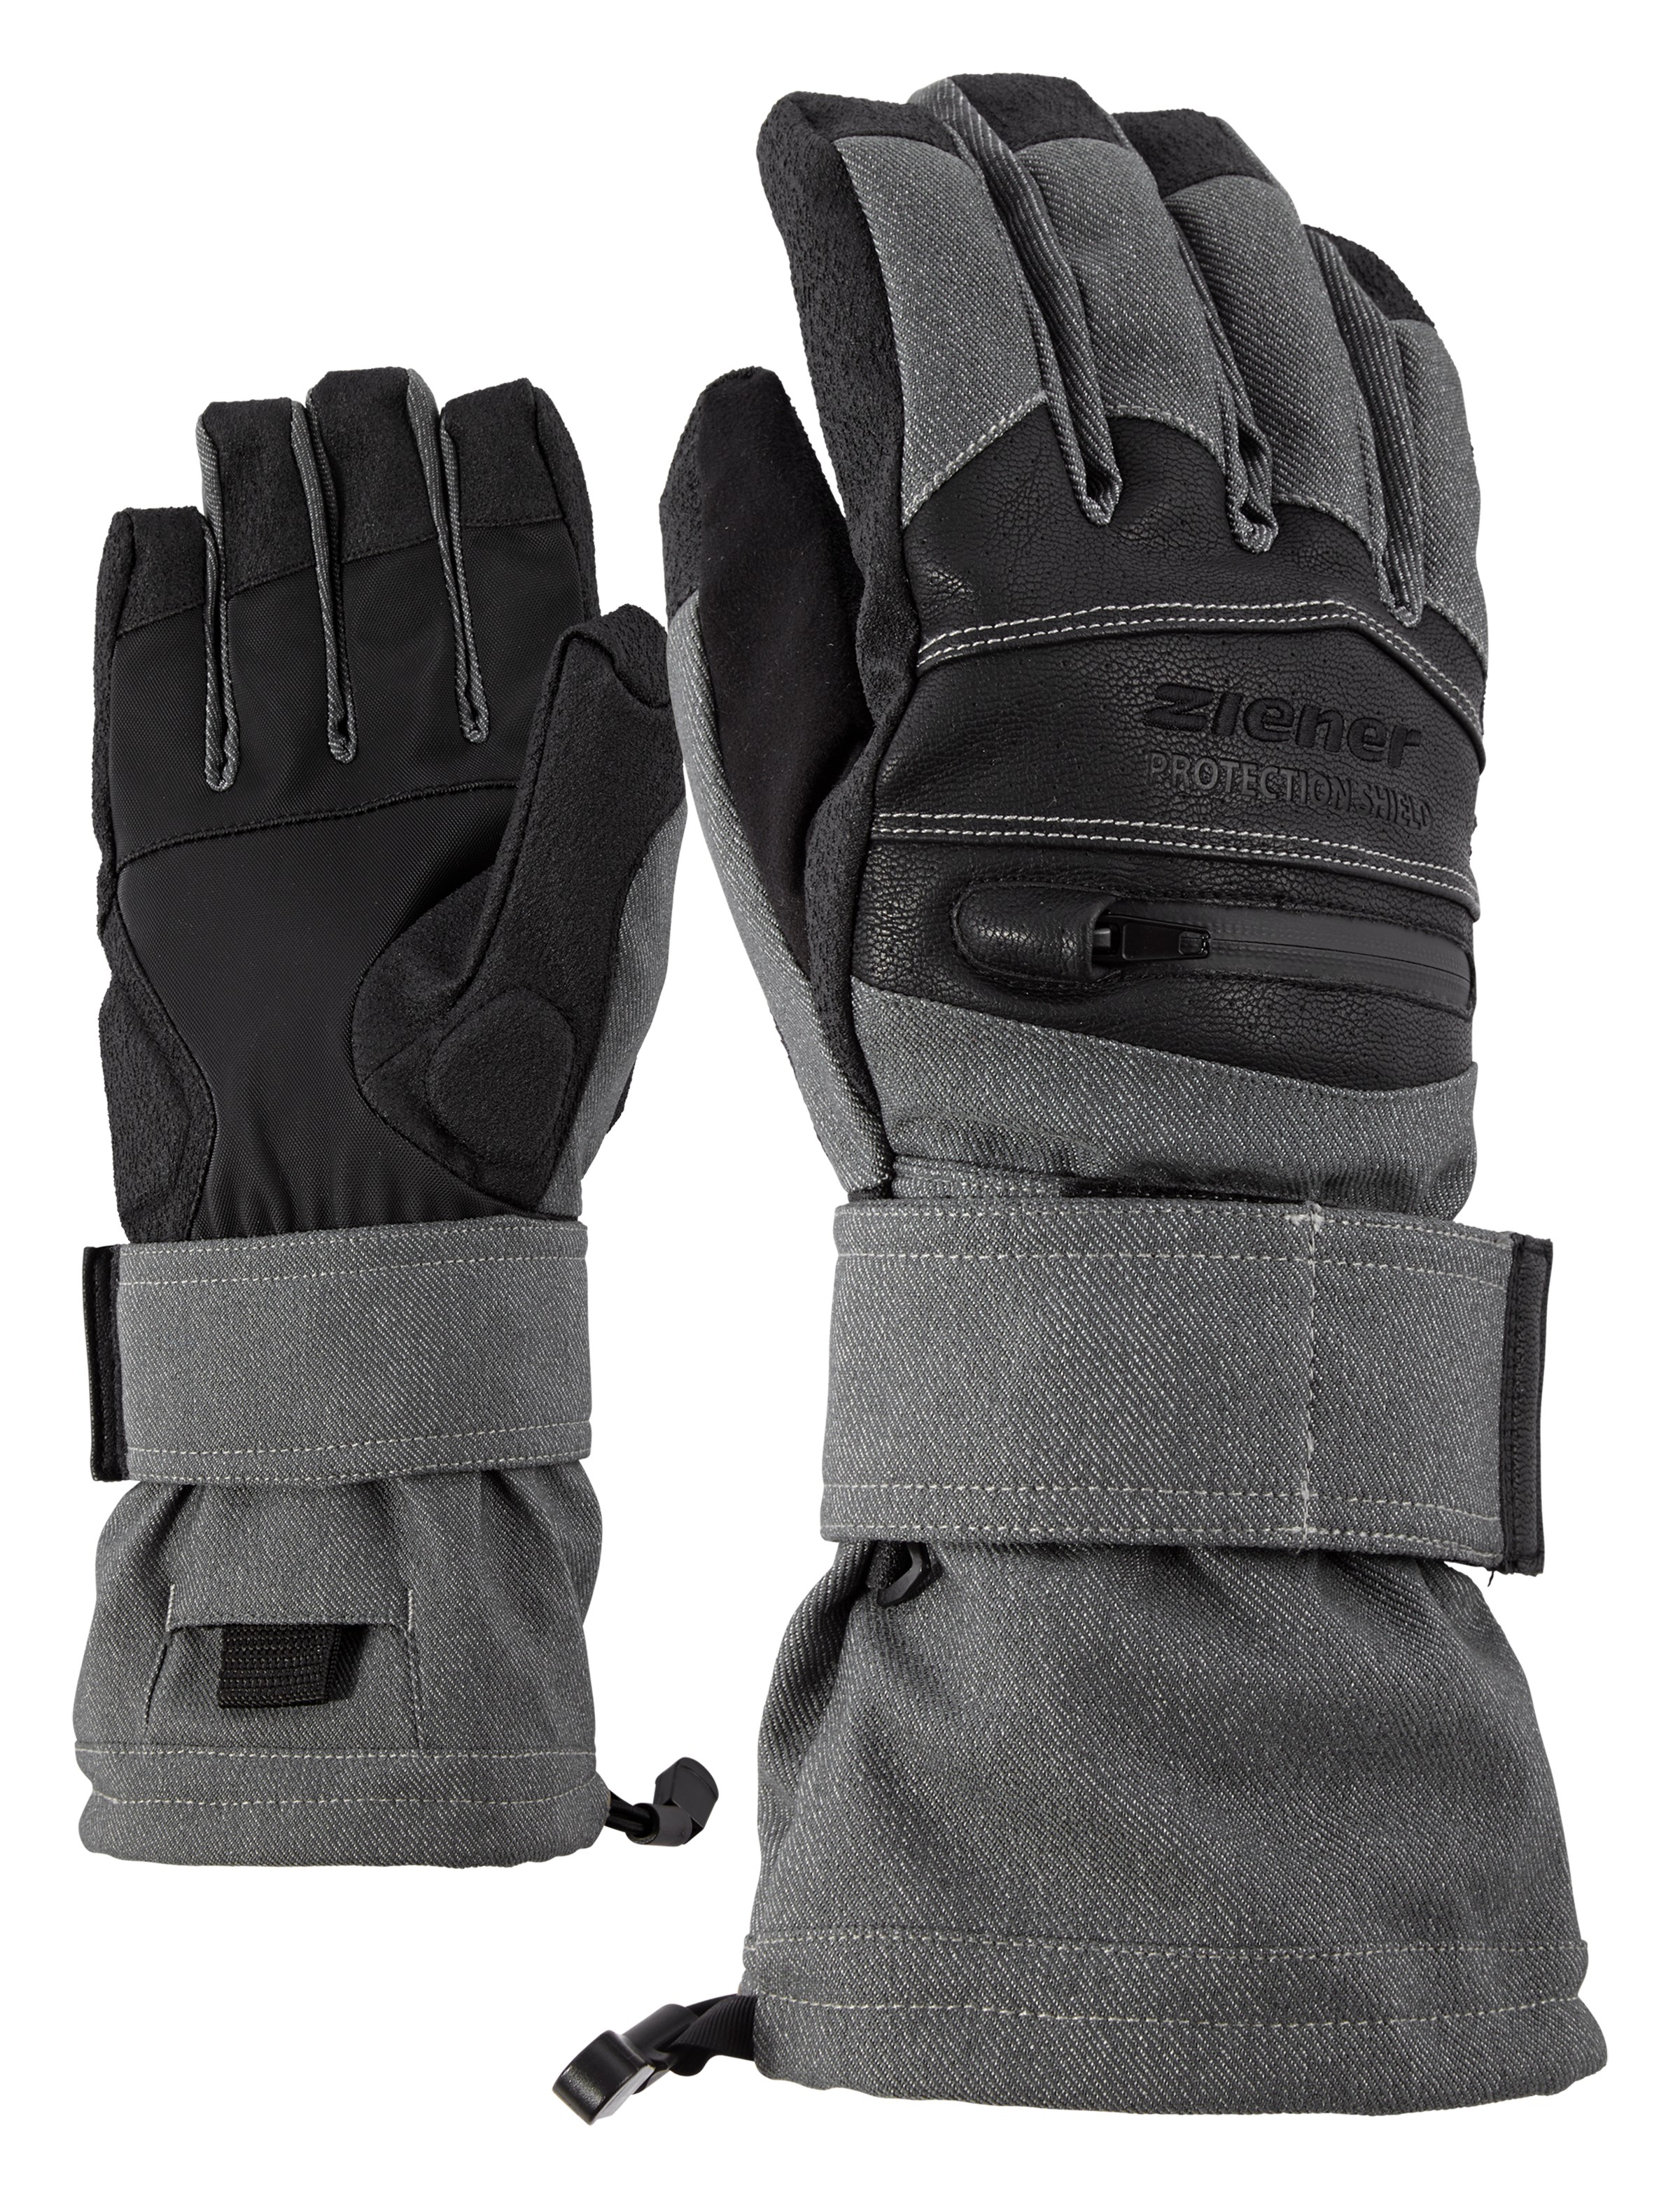 Ziener Glove Midlife denim 17/18 -grey AS(R)